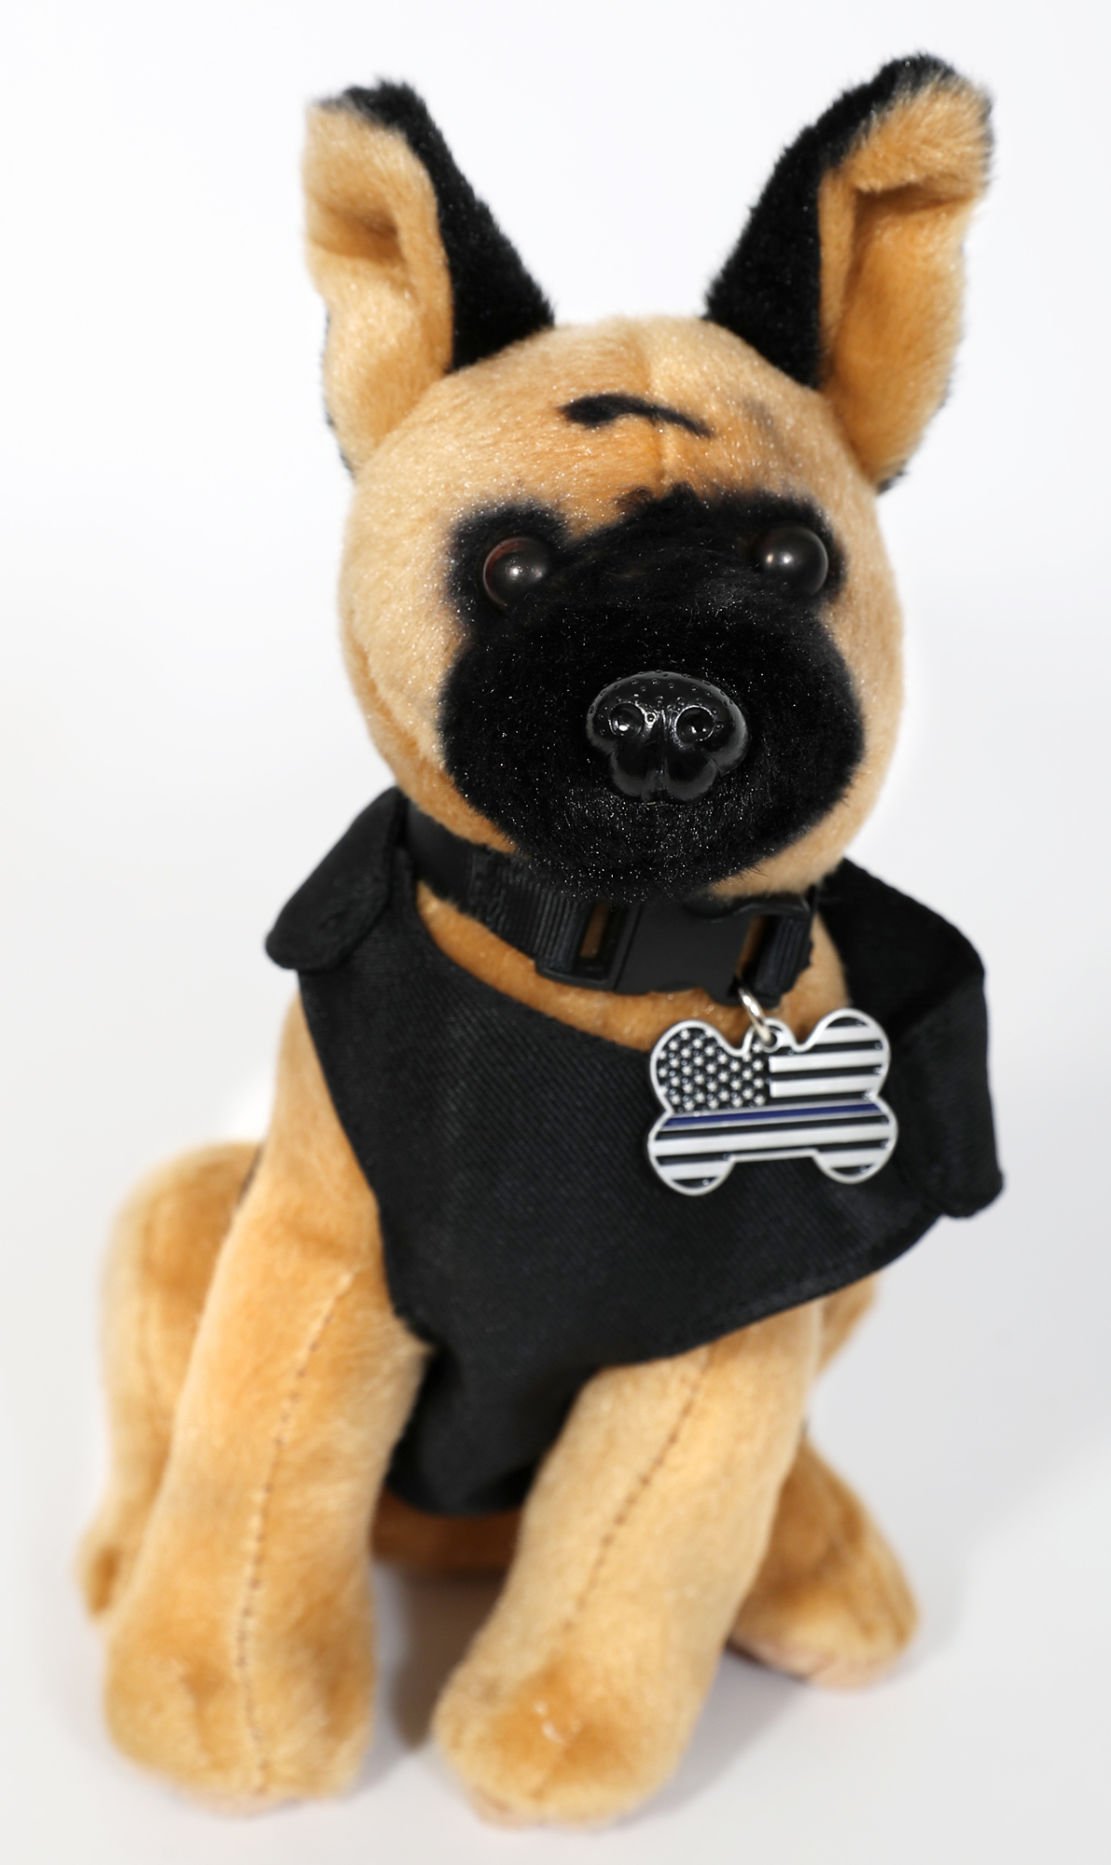 police dog plush toy